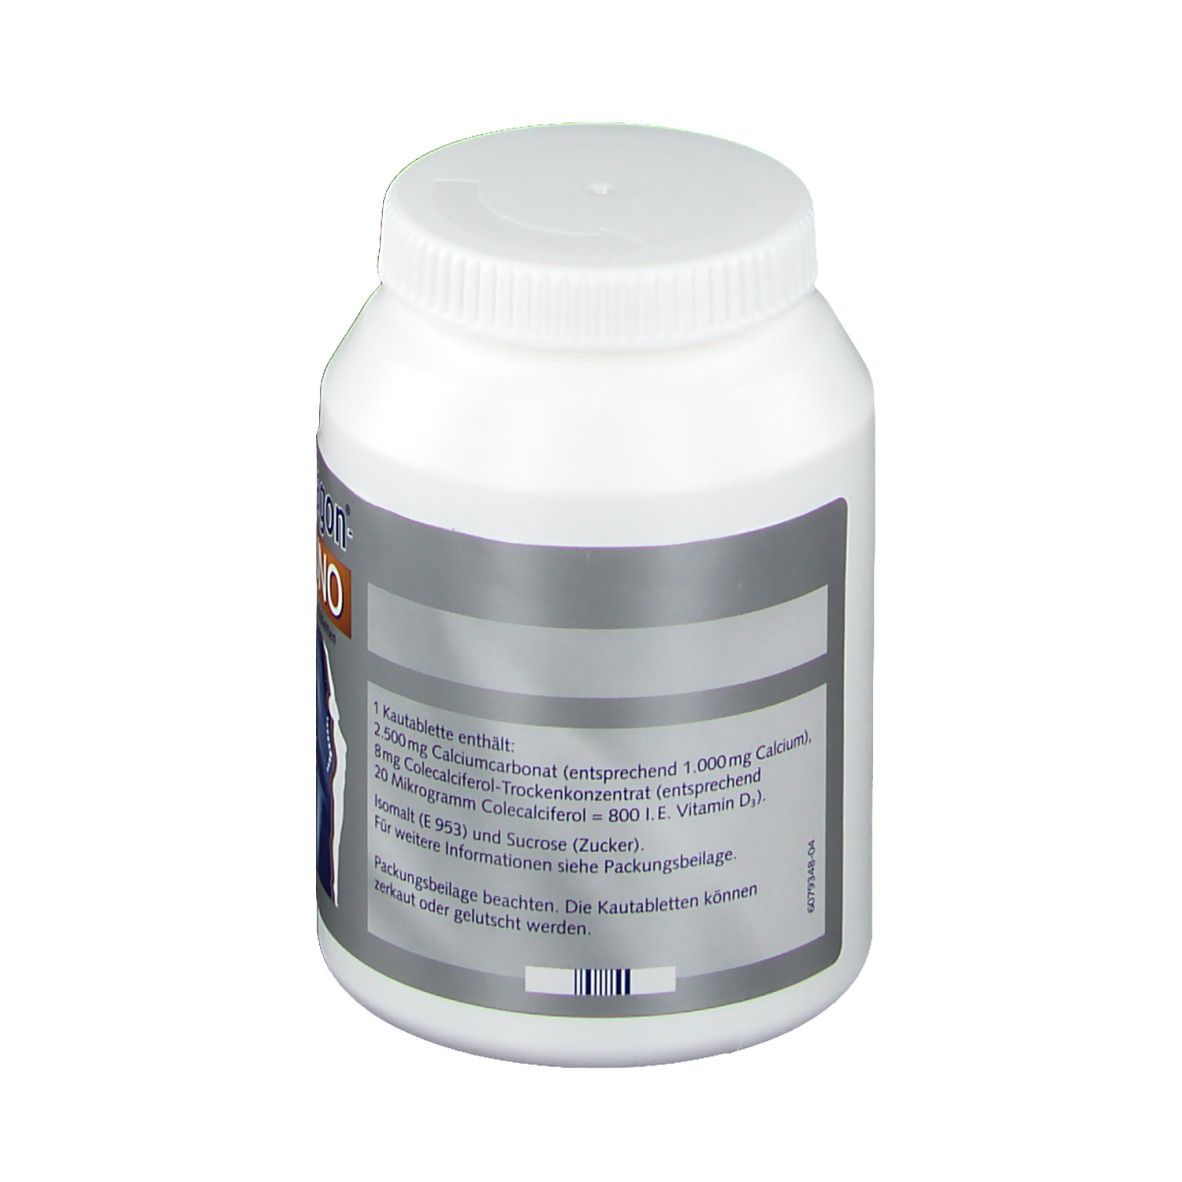 Calcimagon® D3 UNO 1000 mg/ 800 I.E. Kautabletten